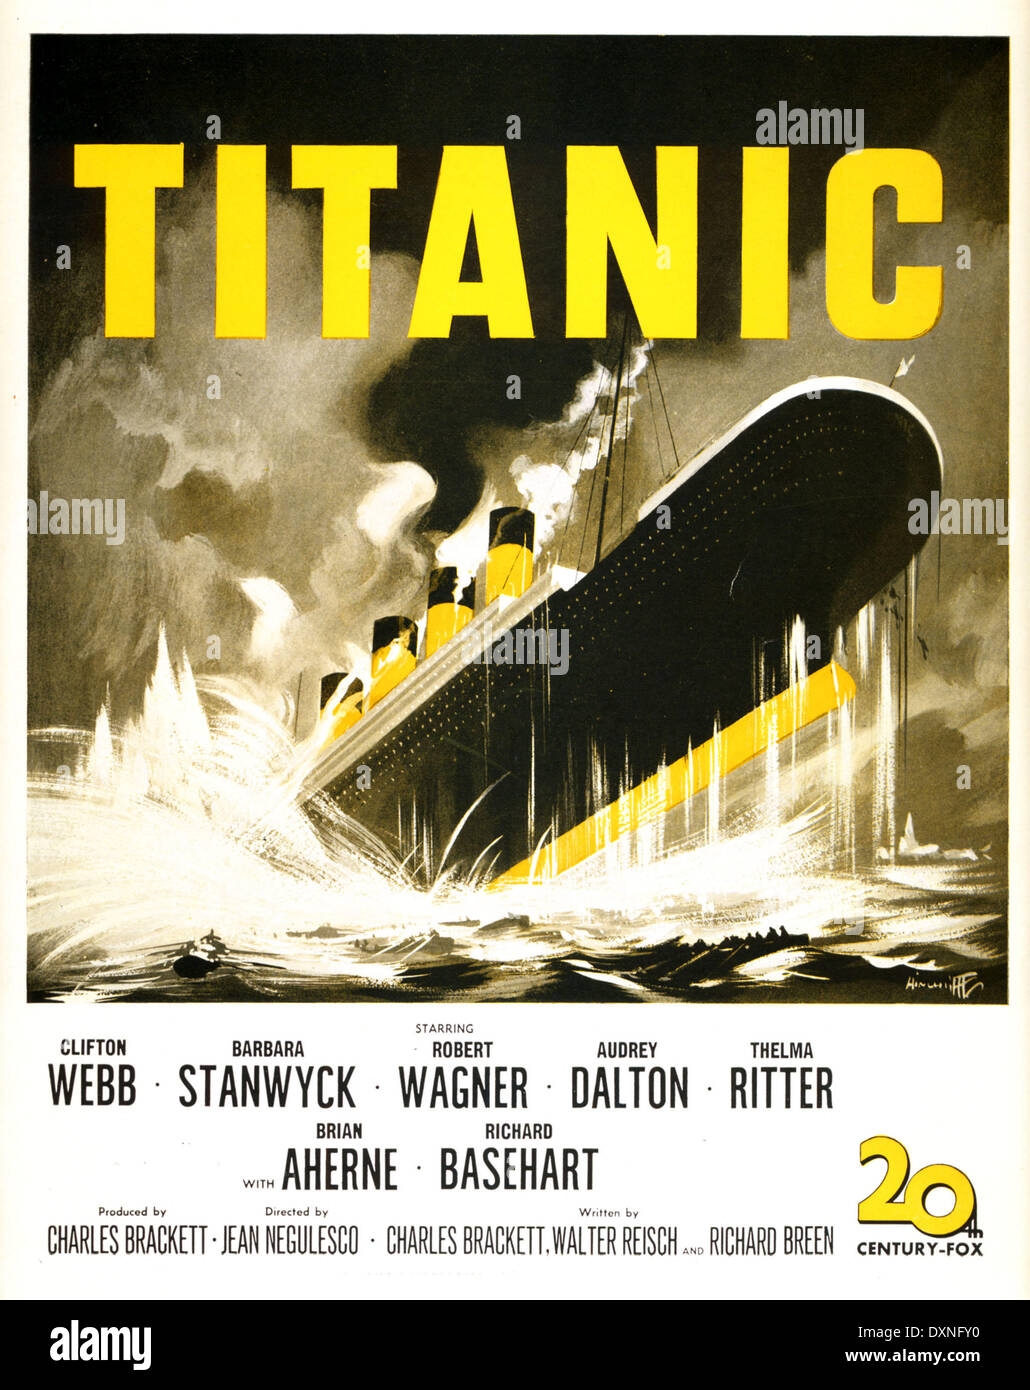 Titanic 1953 Film Fotos Und Bildmaterial In Hoher Auflösung Alamy 